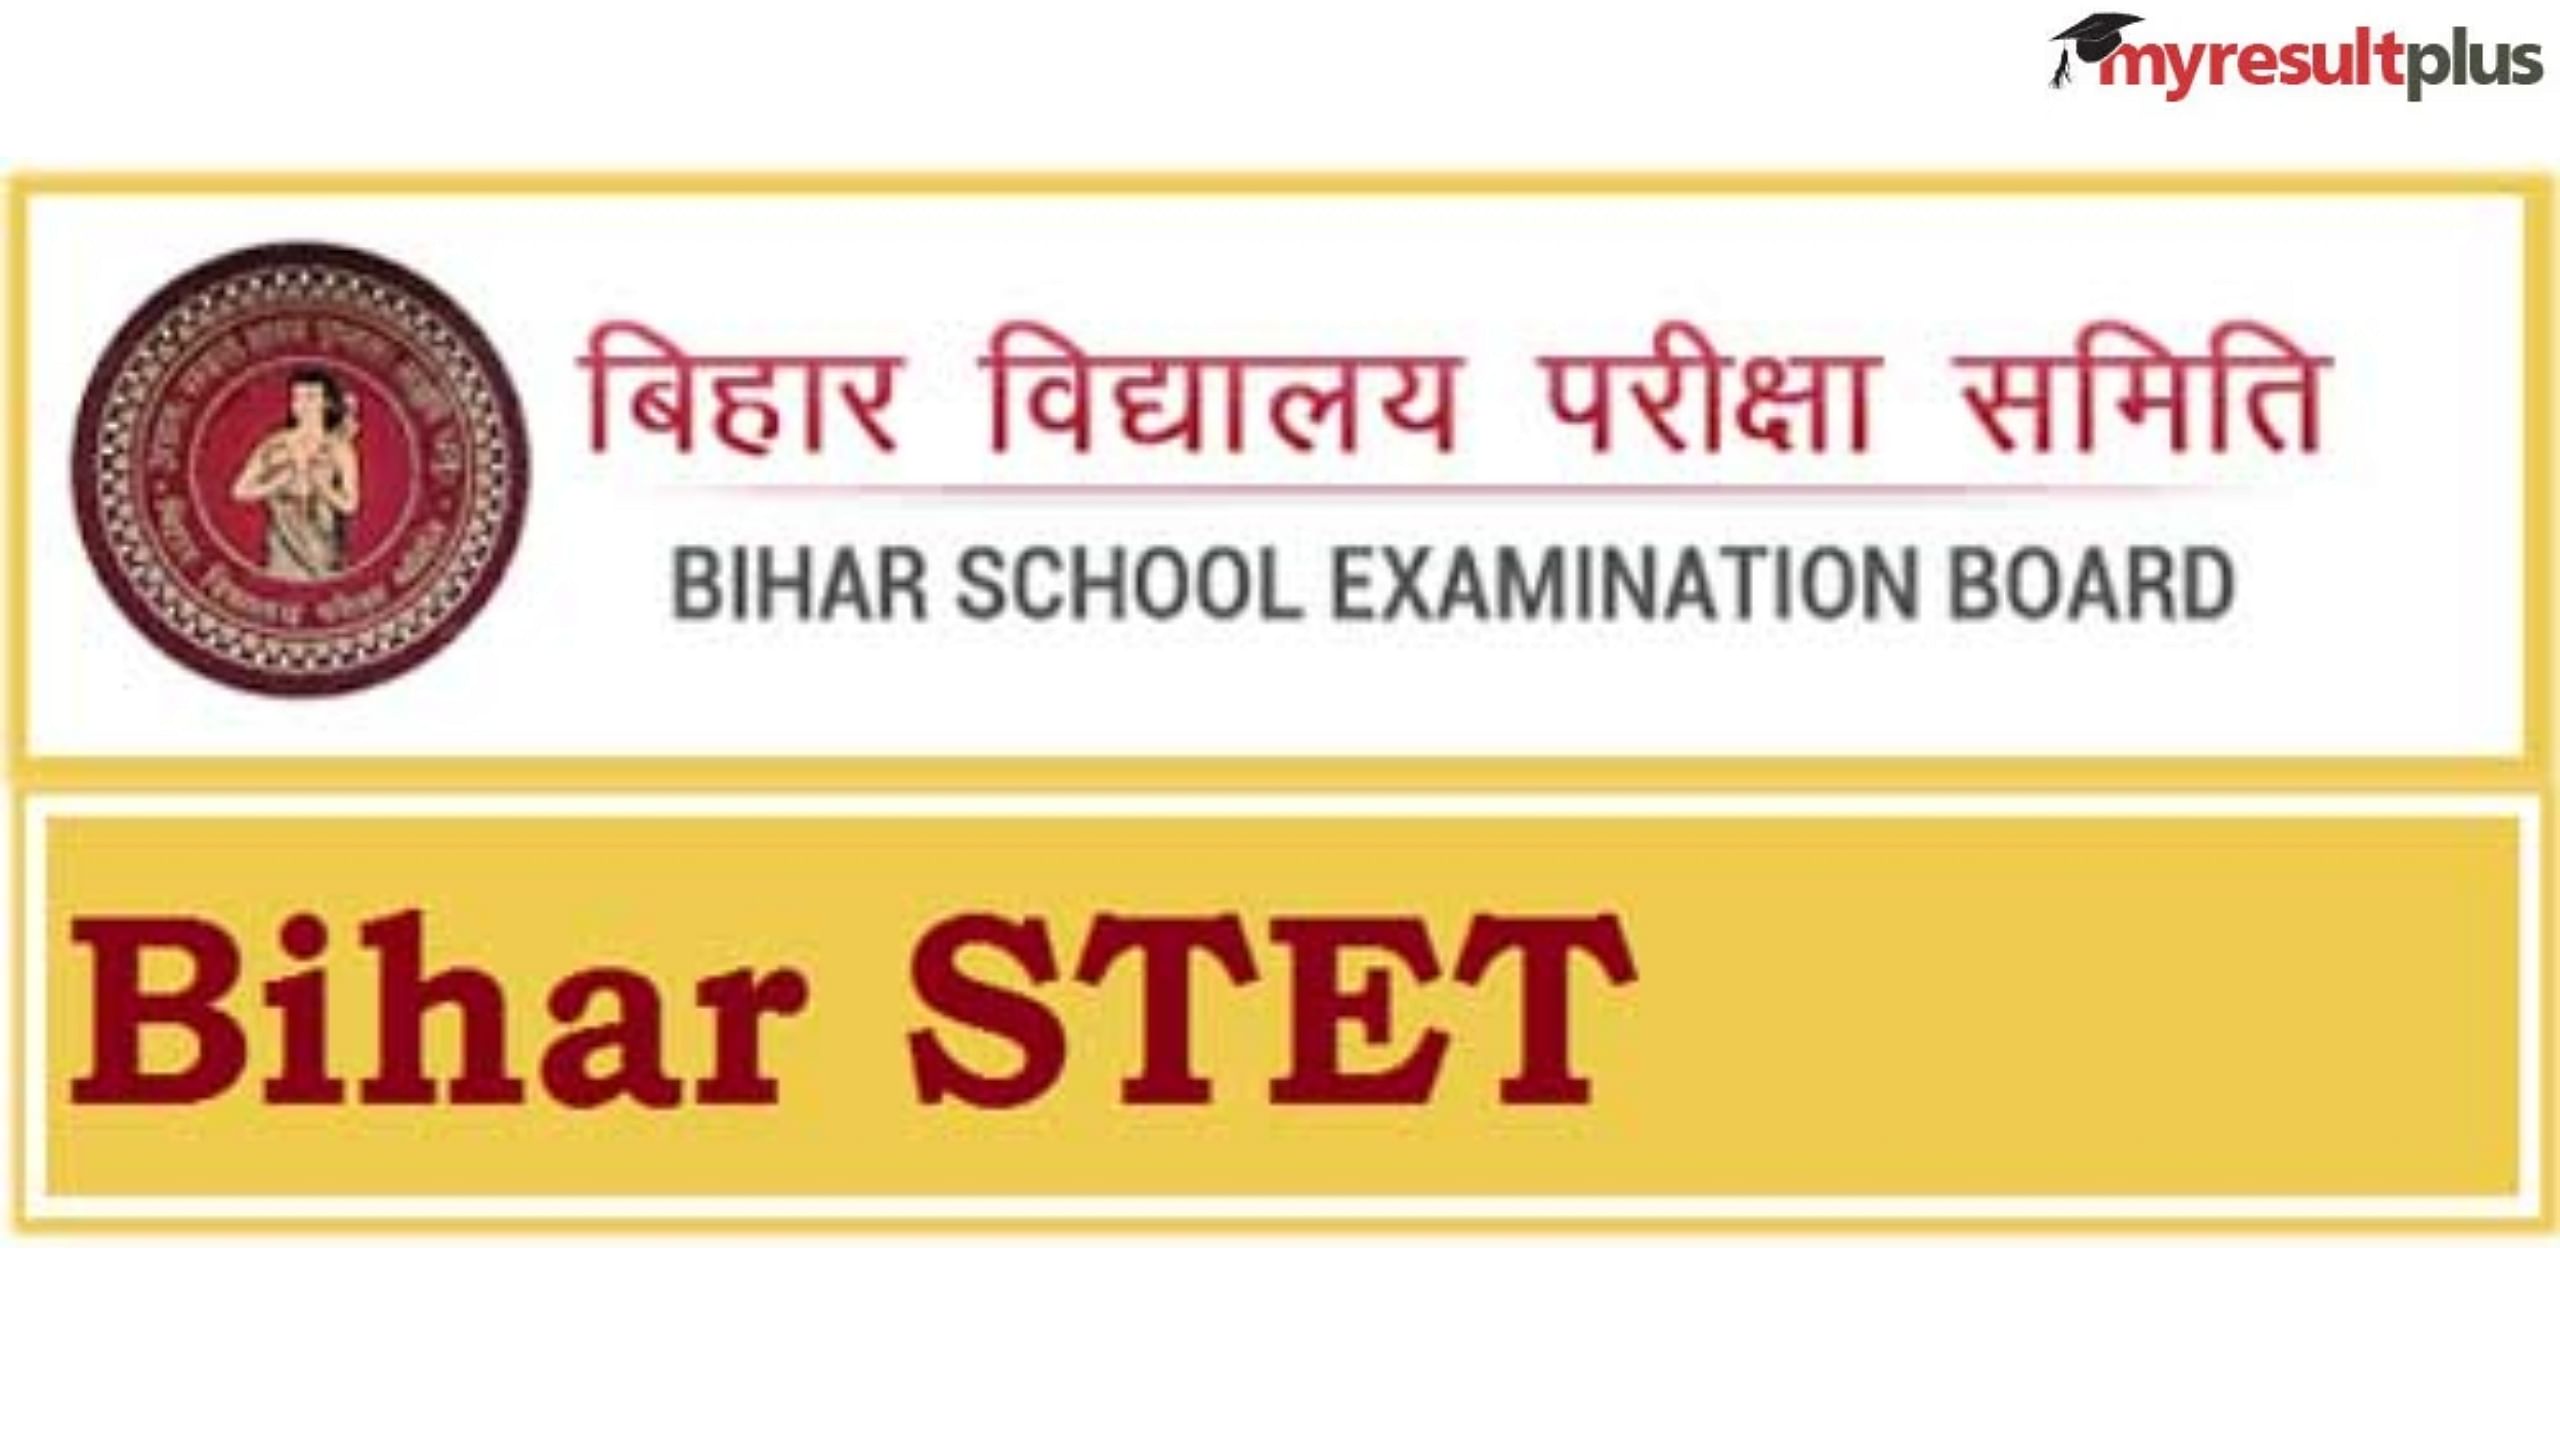 Bihar STET 2023: Registration Starts Today for Bihar Secondary Teacher Eligibility Test, How to Apply